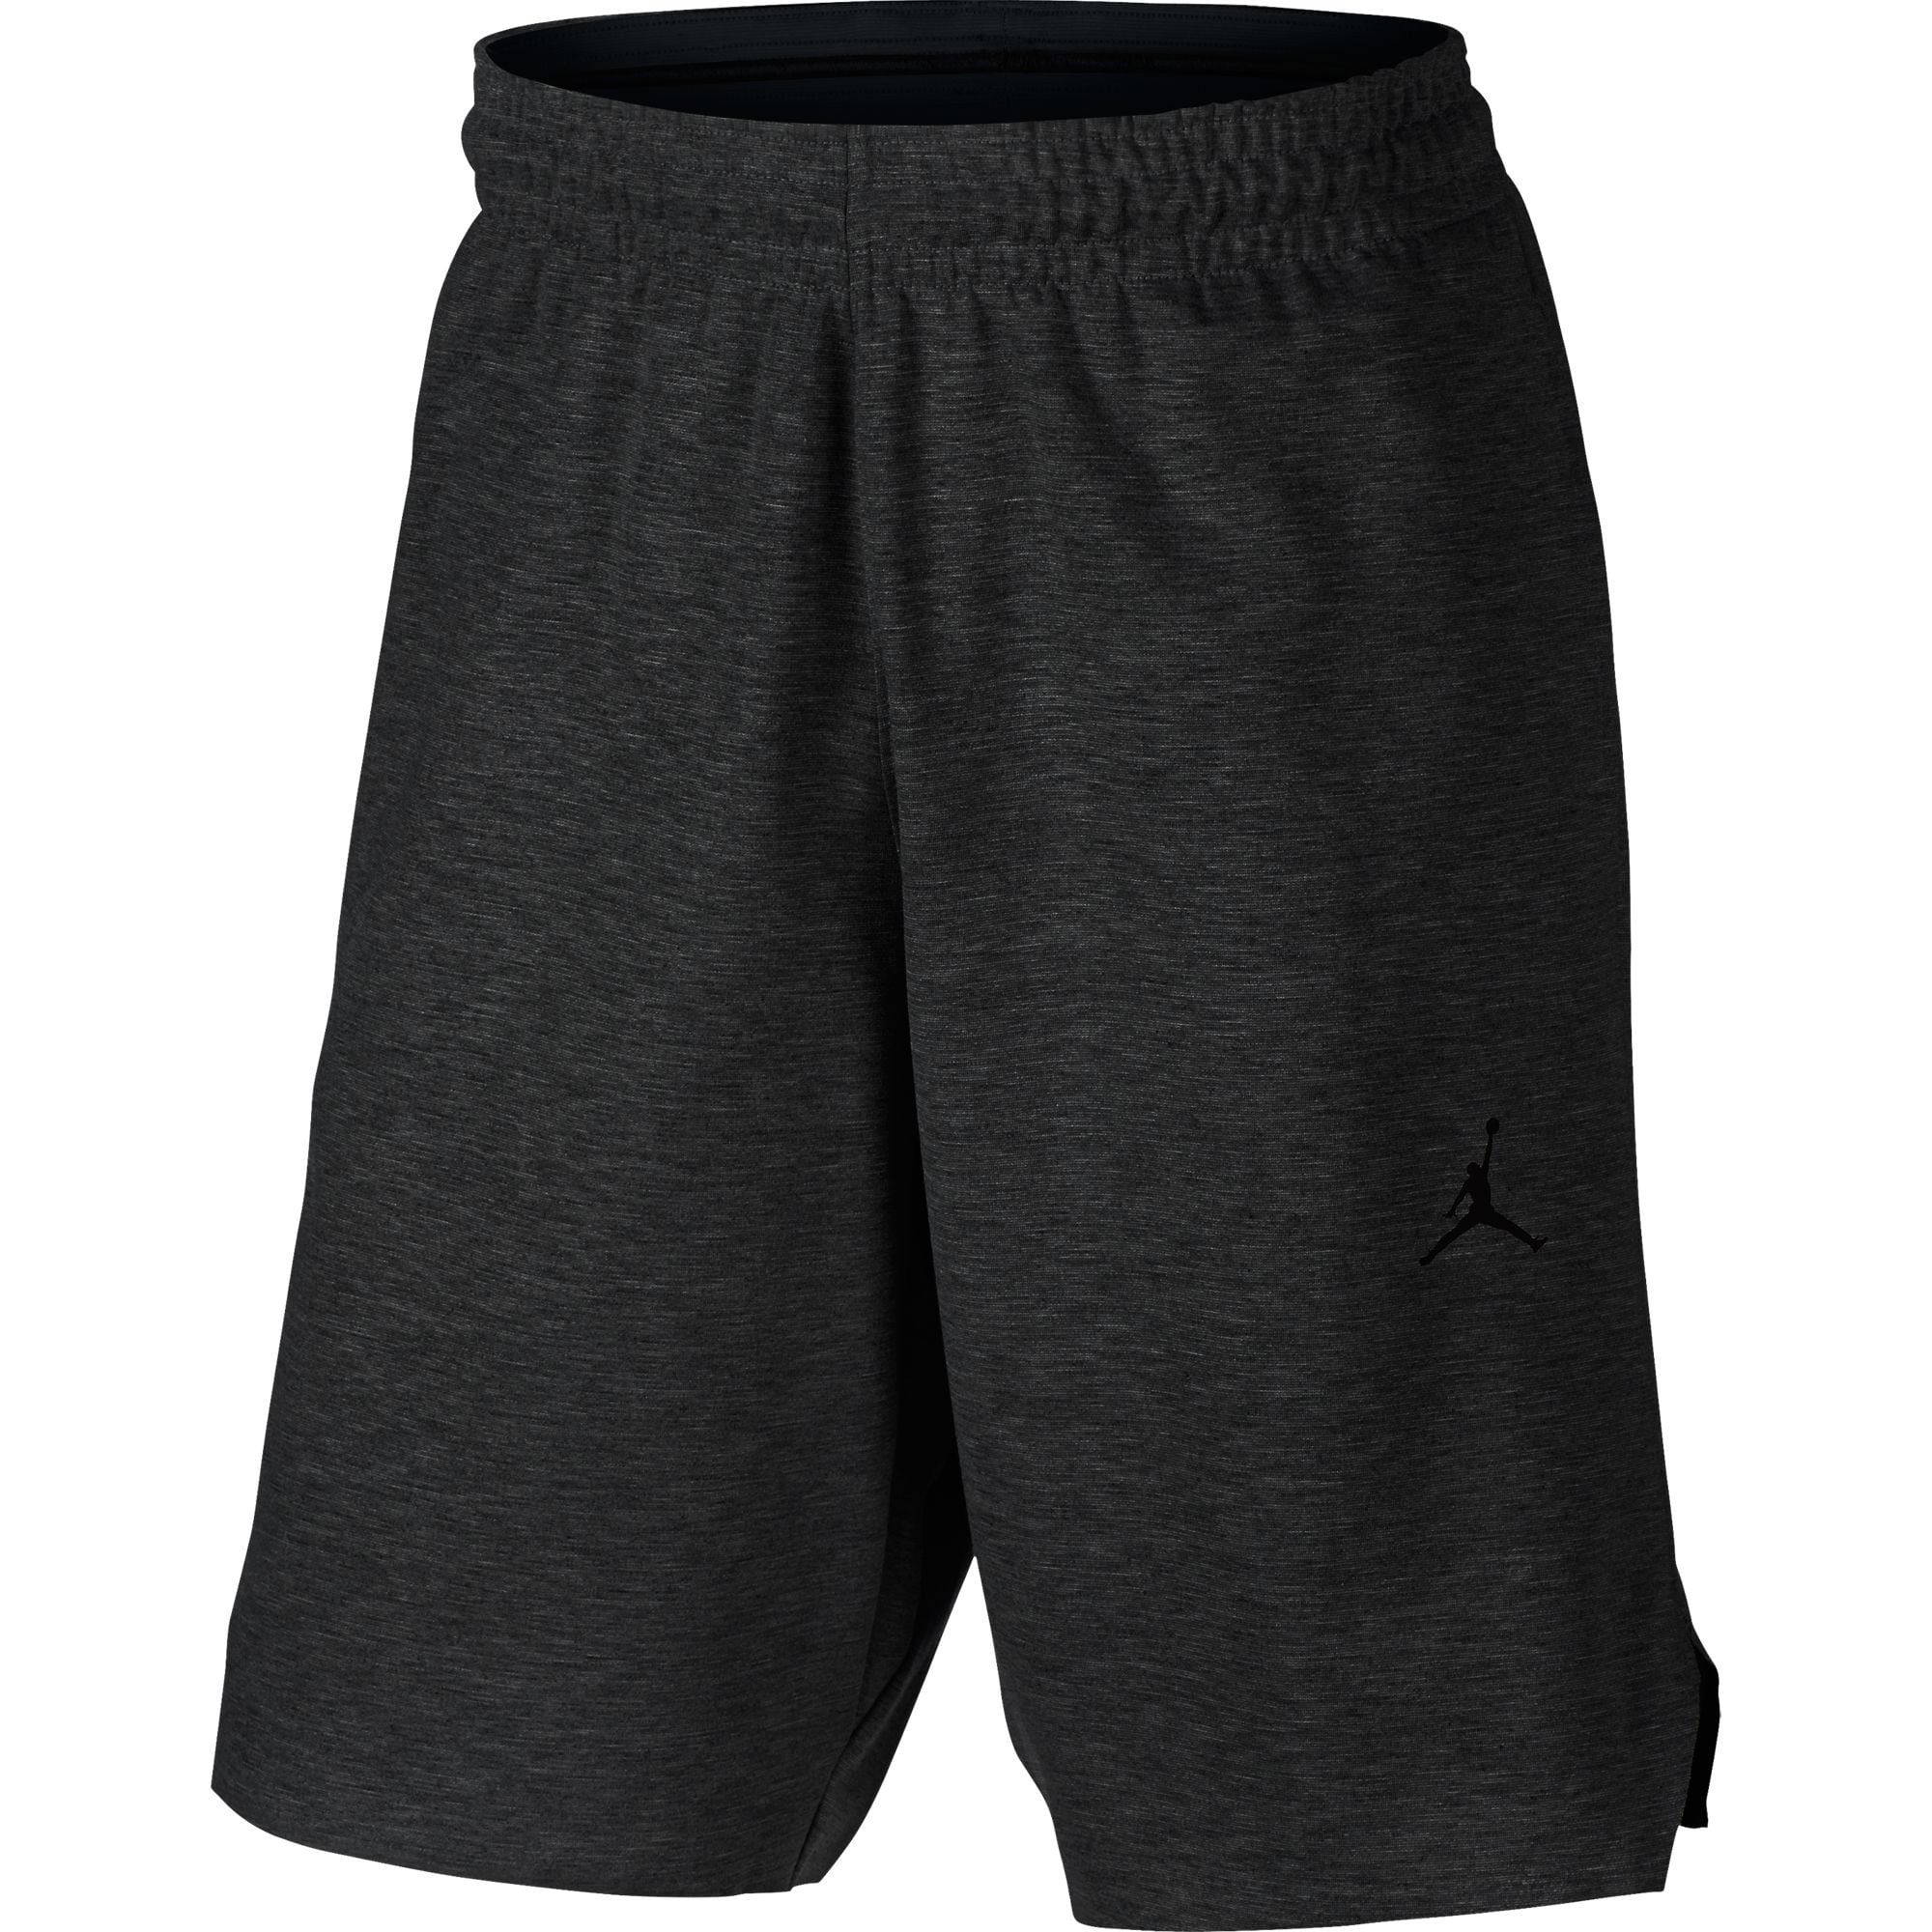 Air Jordan 23 Lux Men's Sportswear Athletic Shorts Black 812586-032 ...